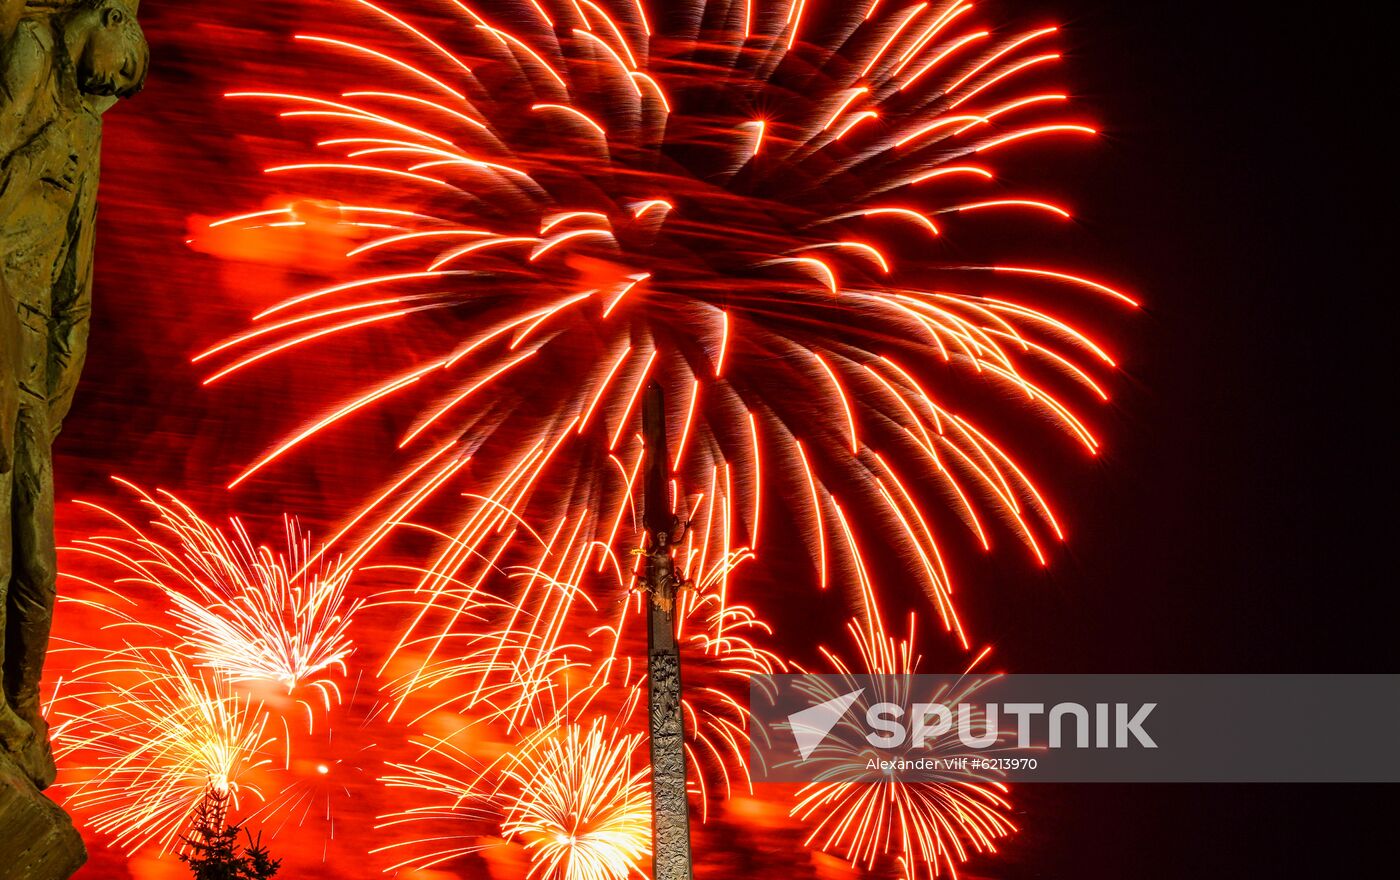 Fireworks marking 75th anniversary of Bratislava liberation